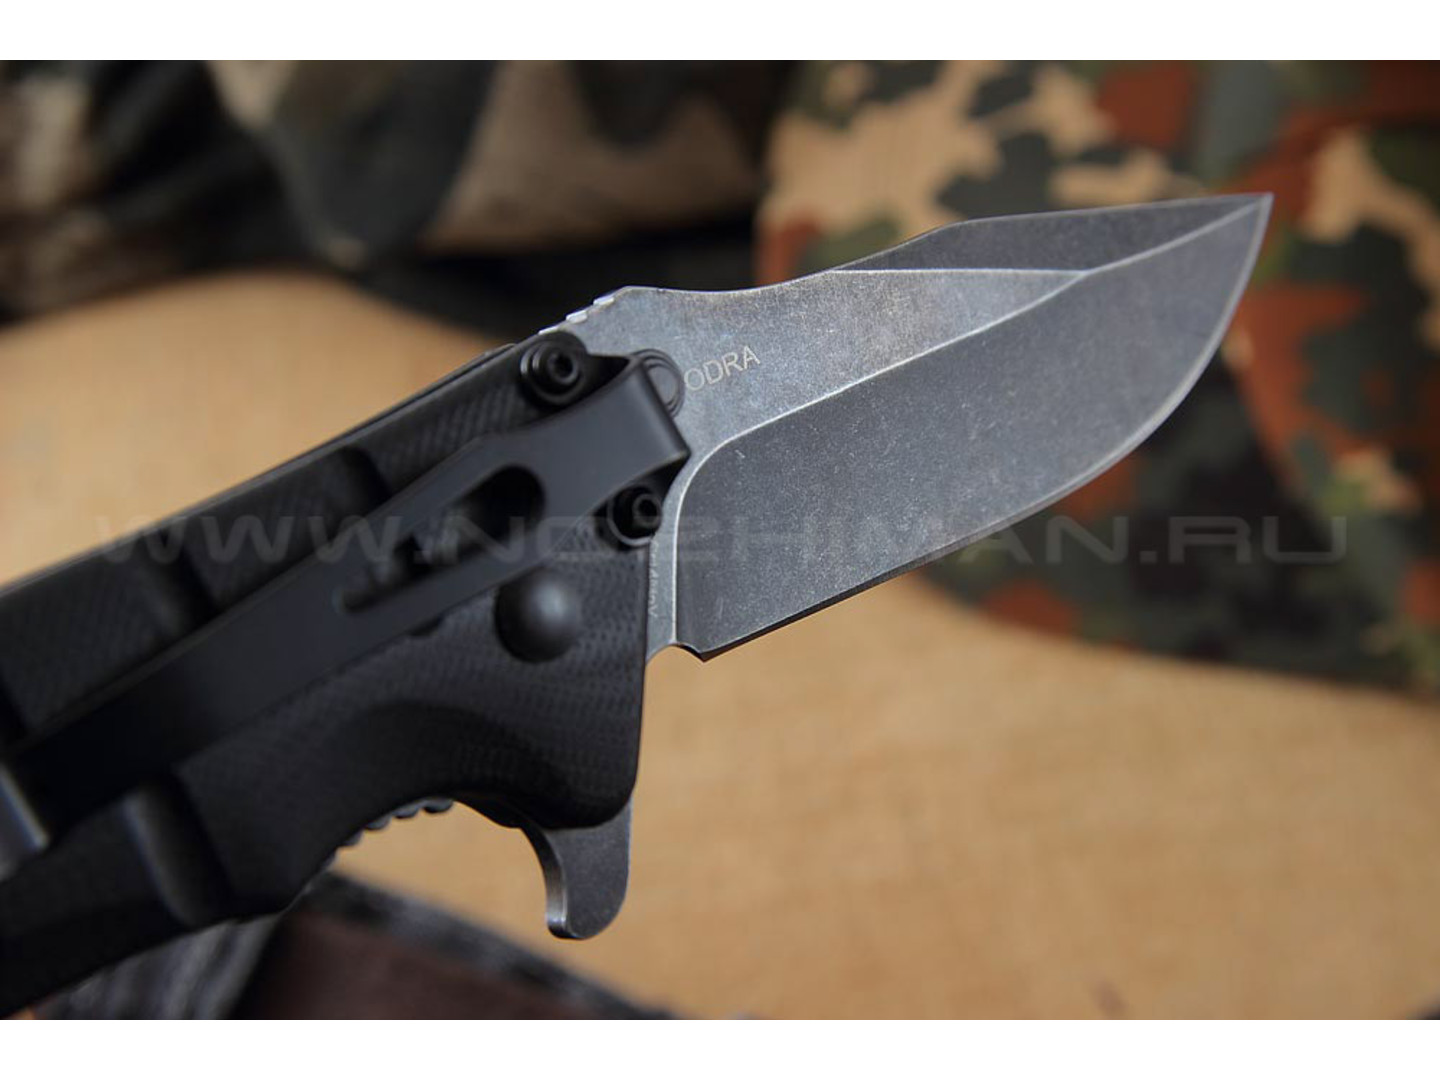 Shifter нож Odra сталь 8Cr14Mov blackwash, рукоять G10 black